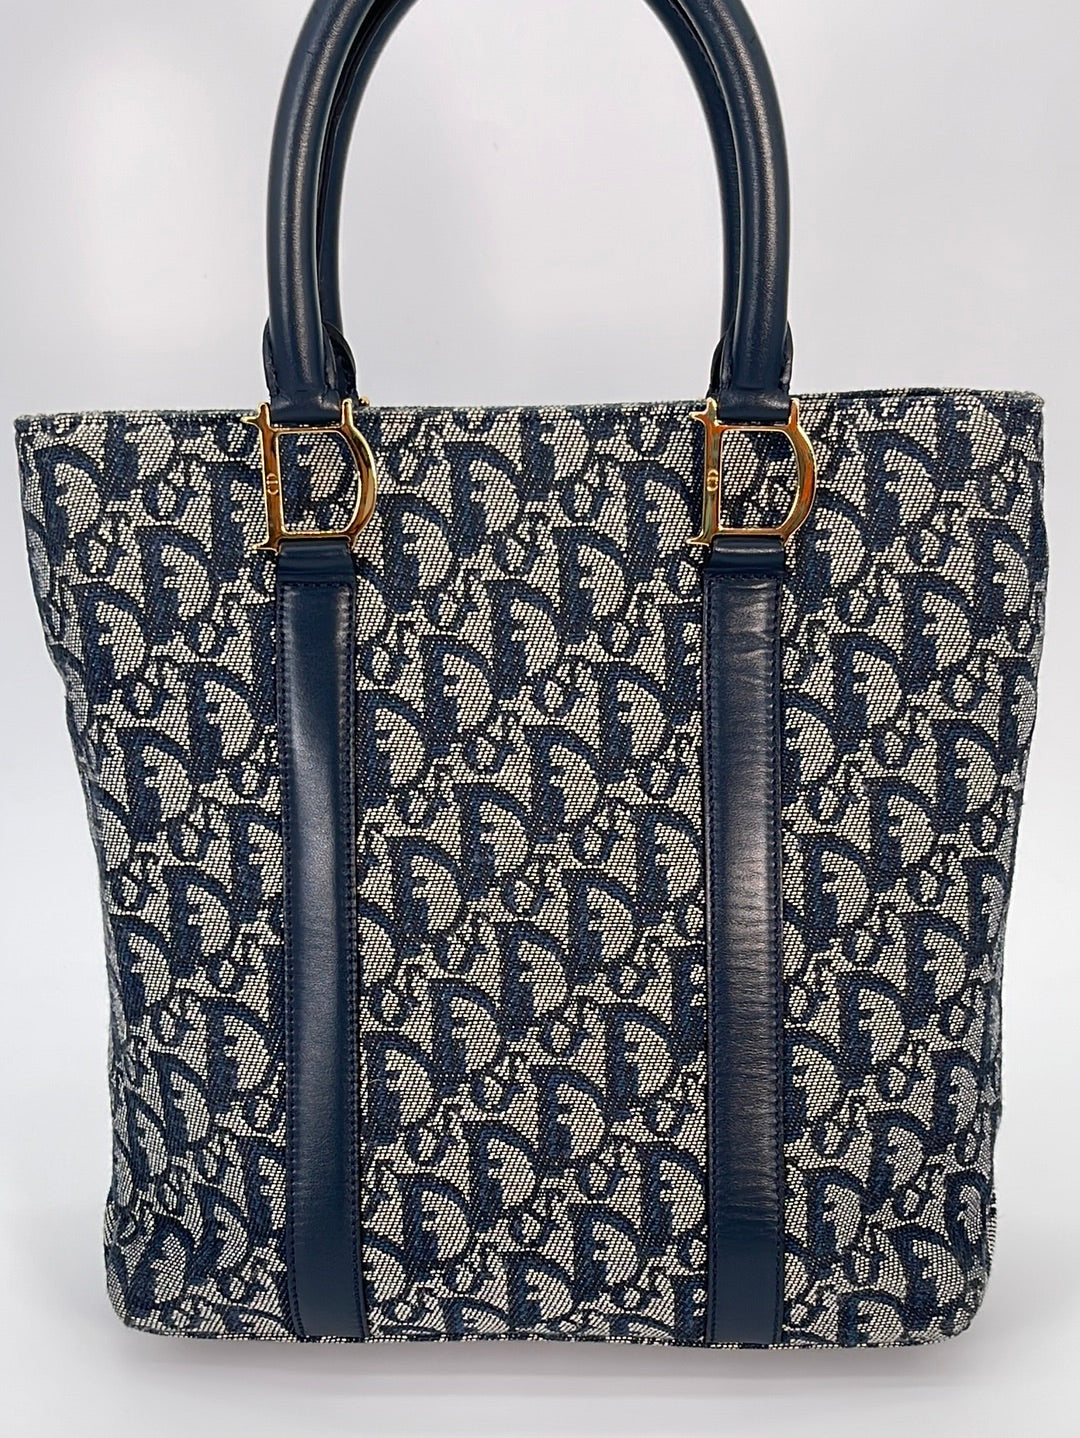 Christian Dior Women's Tote Bags